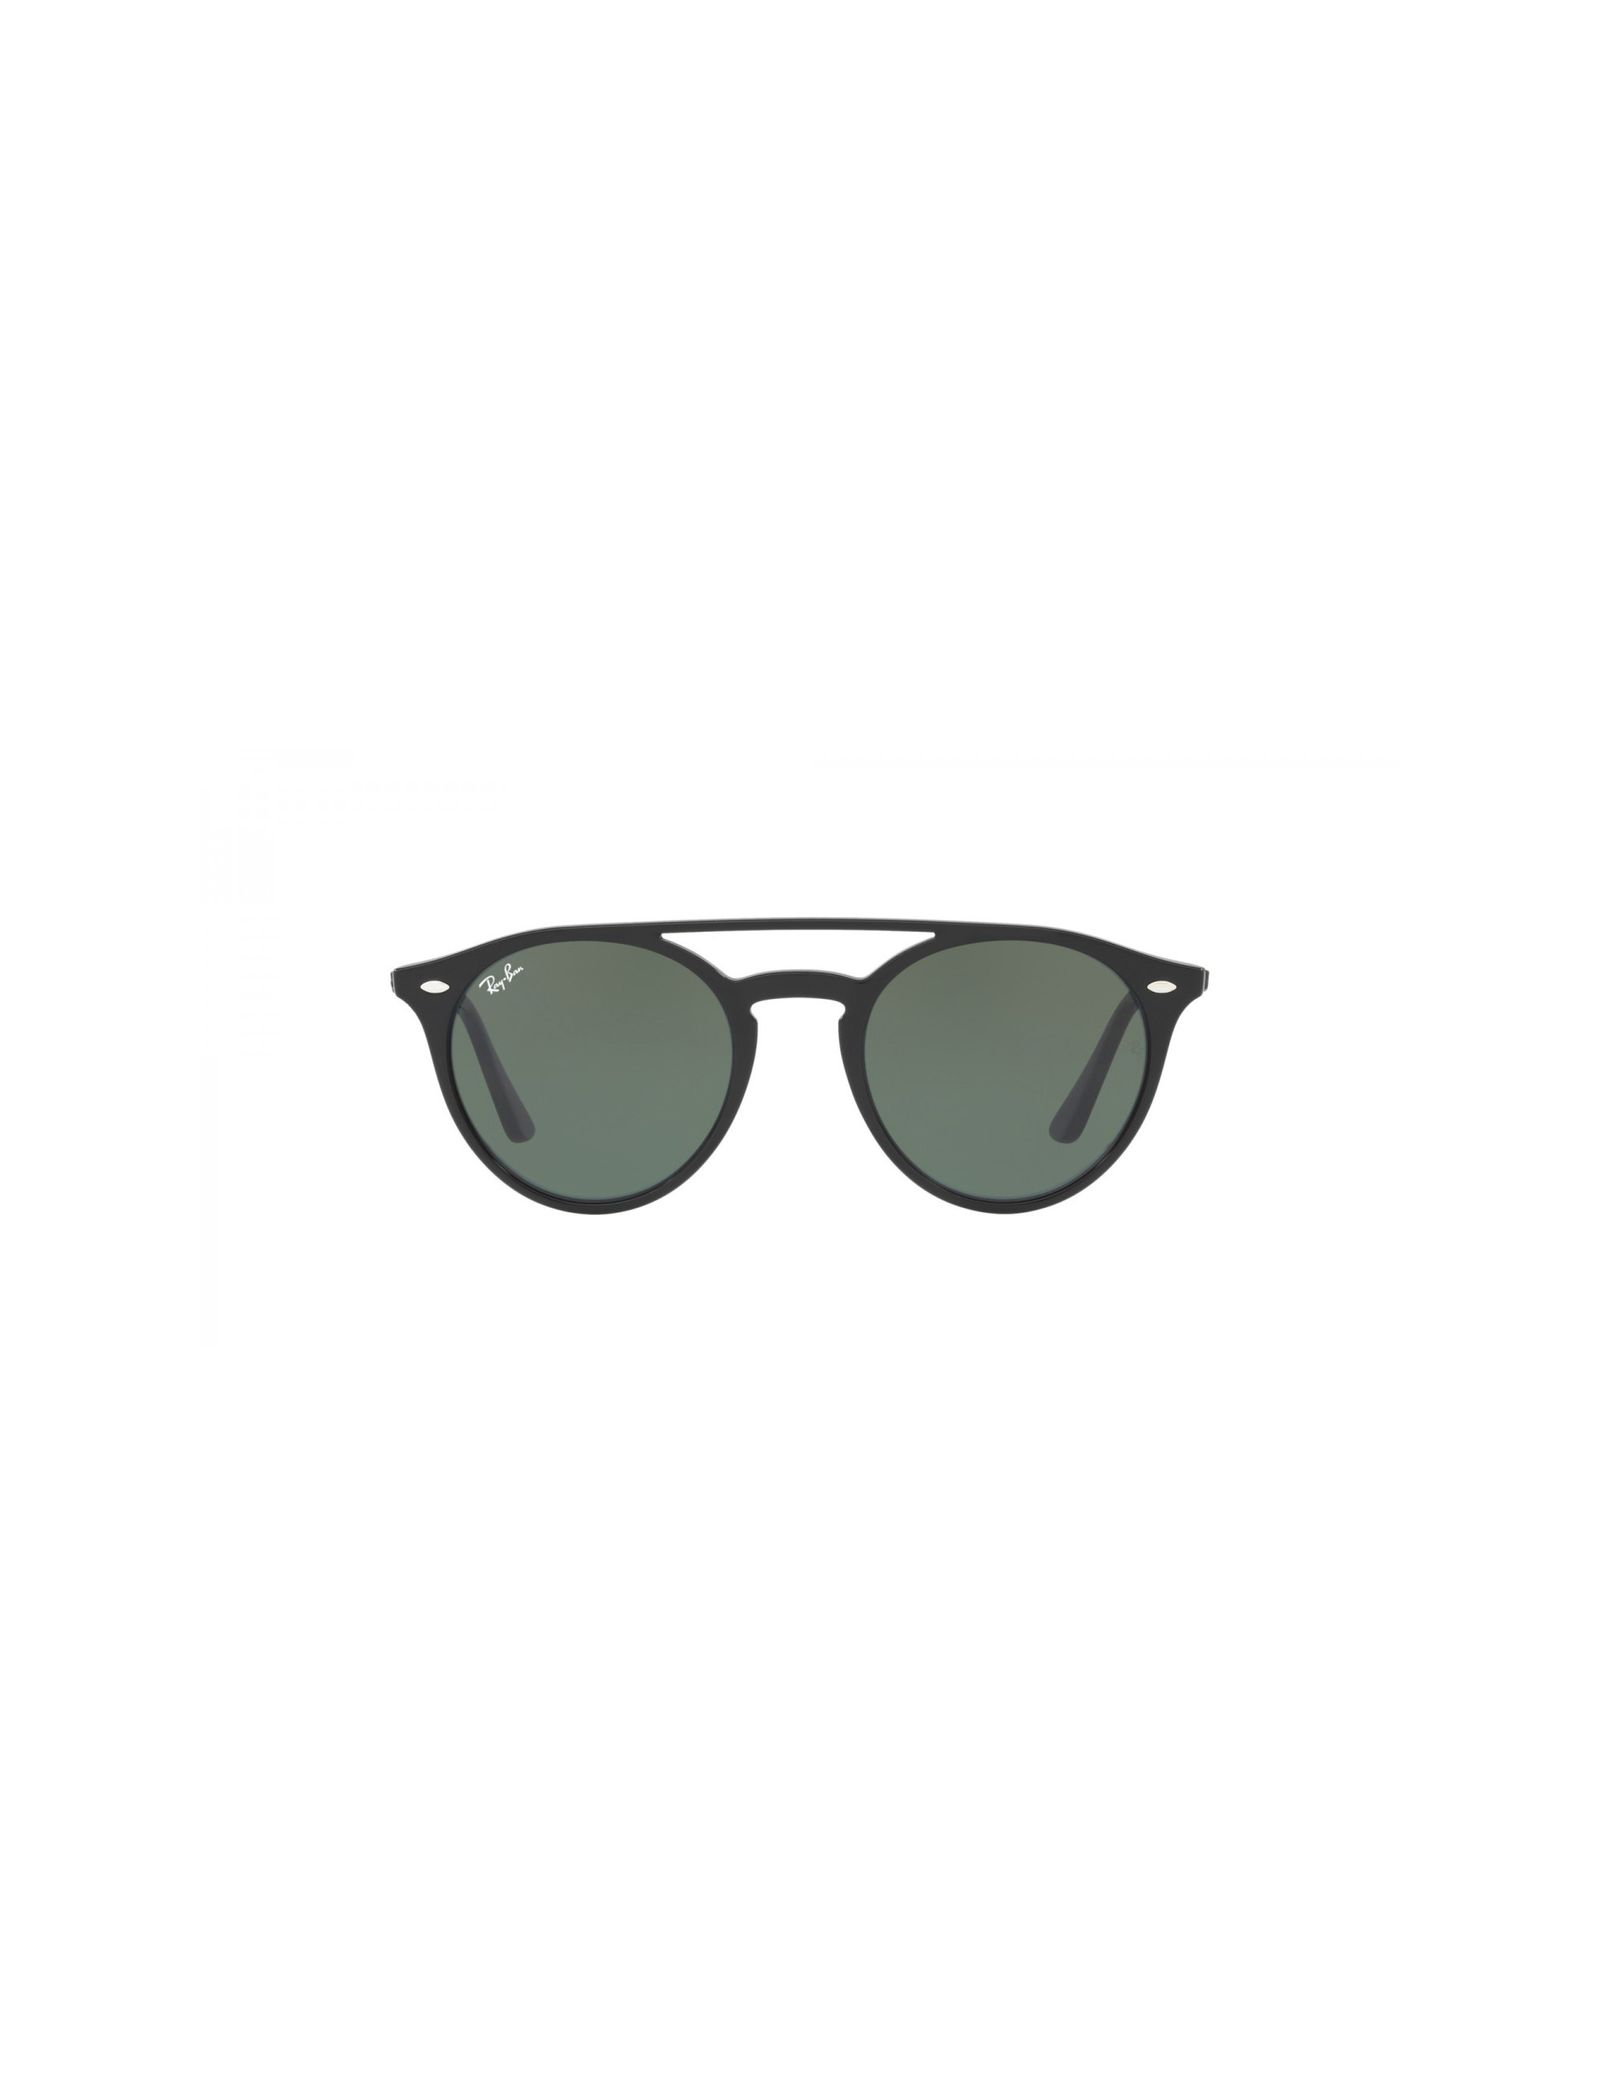 عینک آفتابی ری بن مدل 4279-601/71 - مشکی - 2